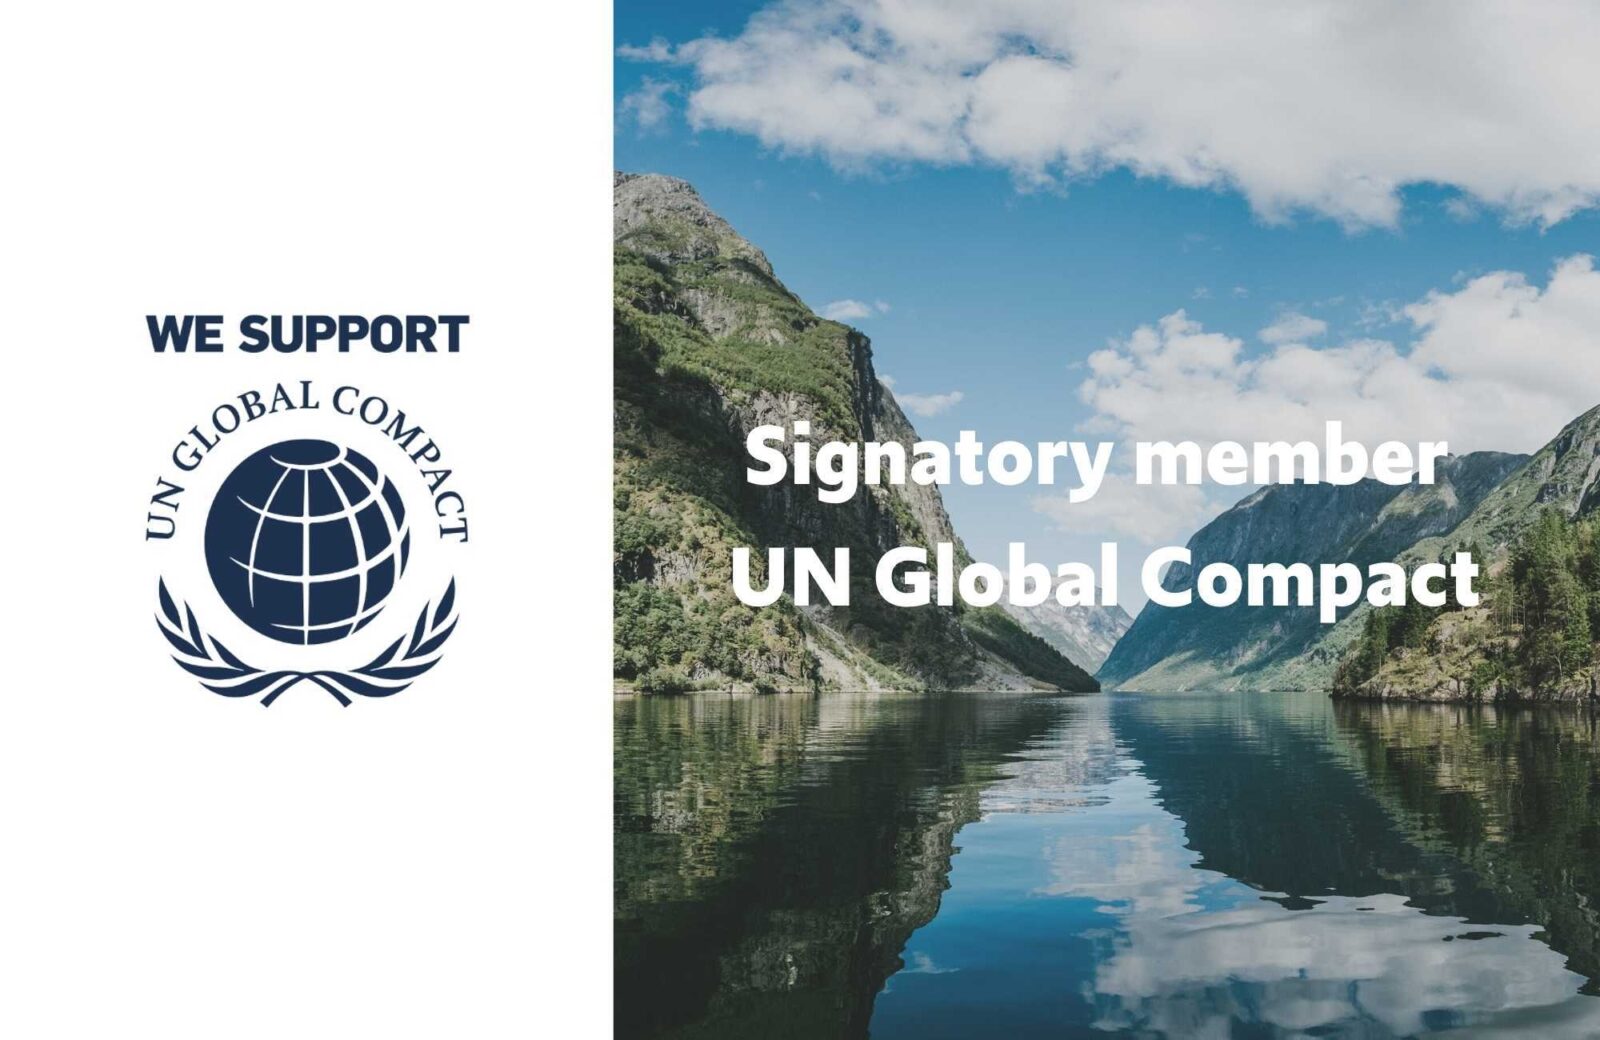 Signatory member UN Global Compact